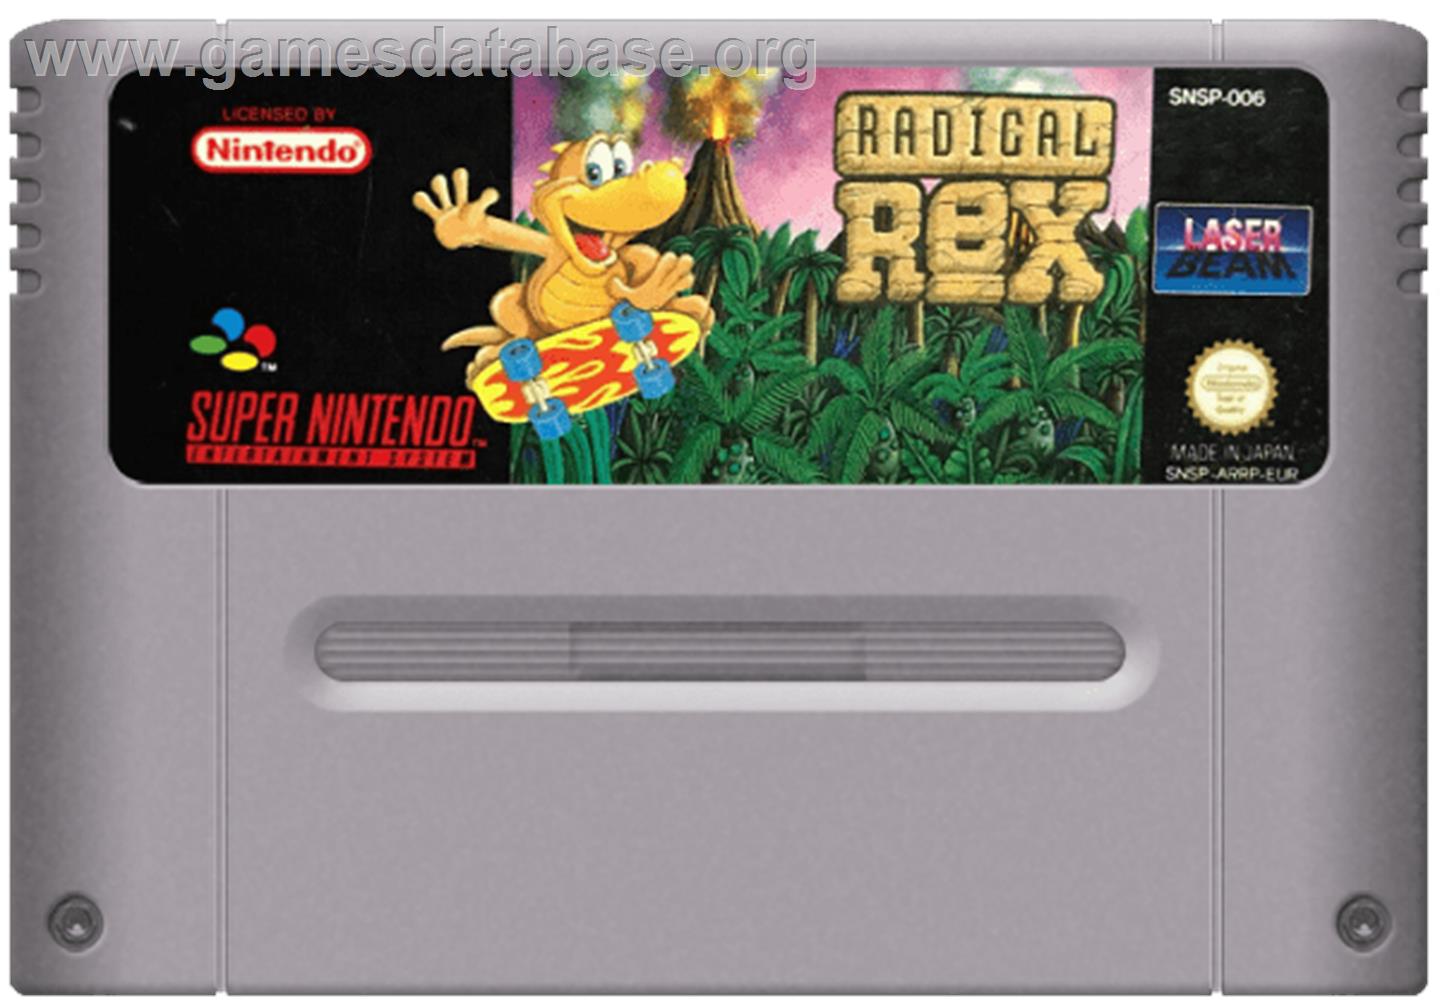 Radical Rex - Nintendo SNES - Artwork - Cartridge